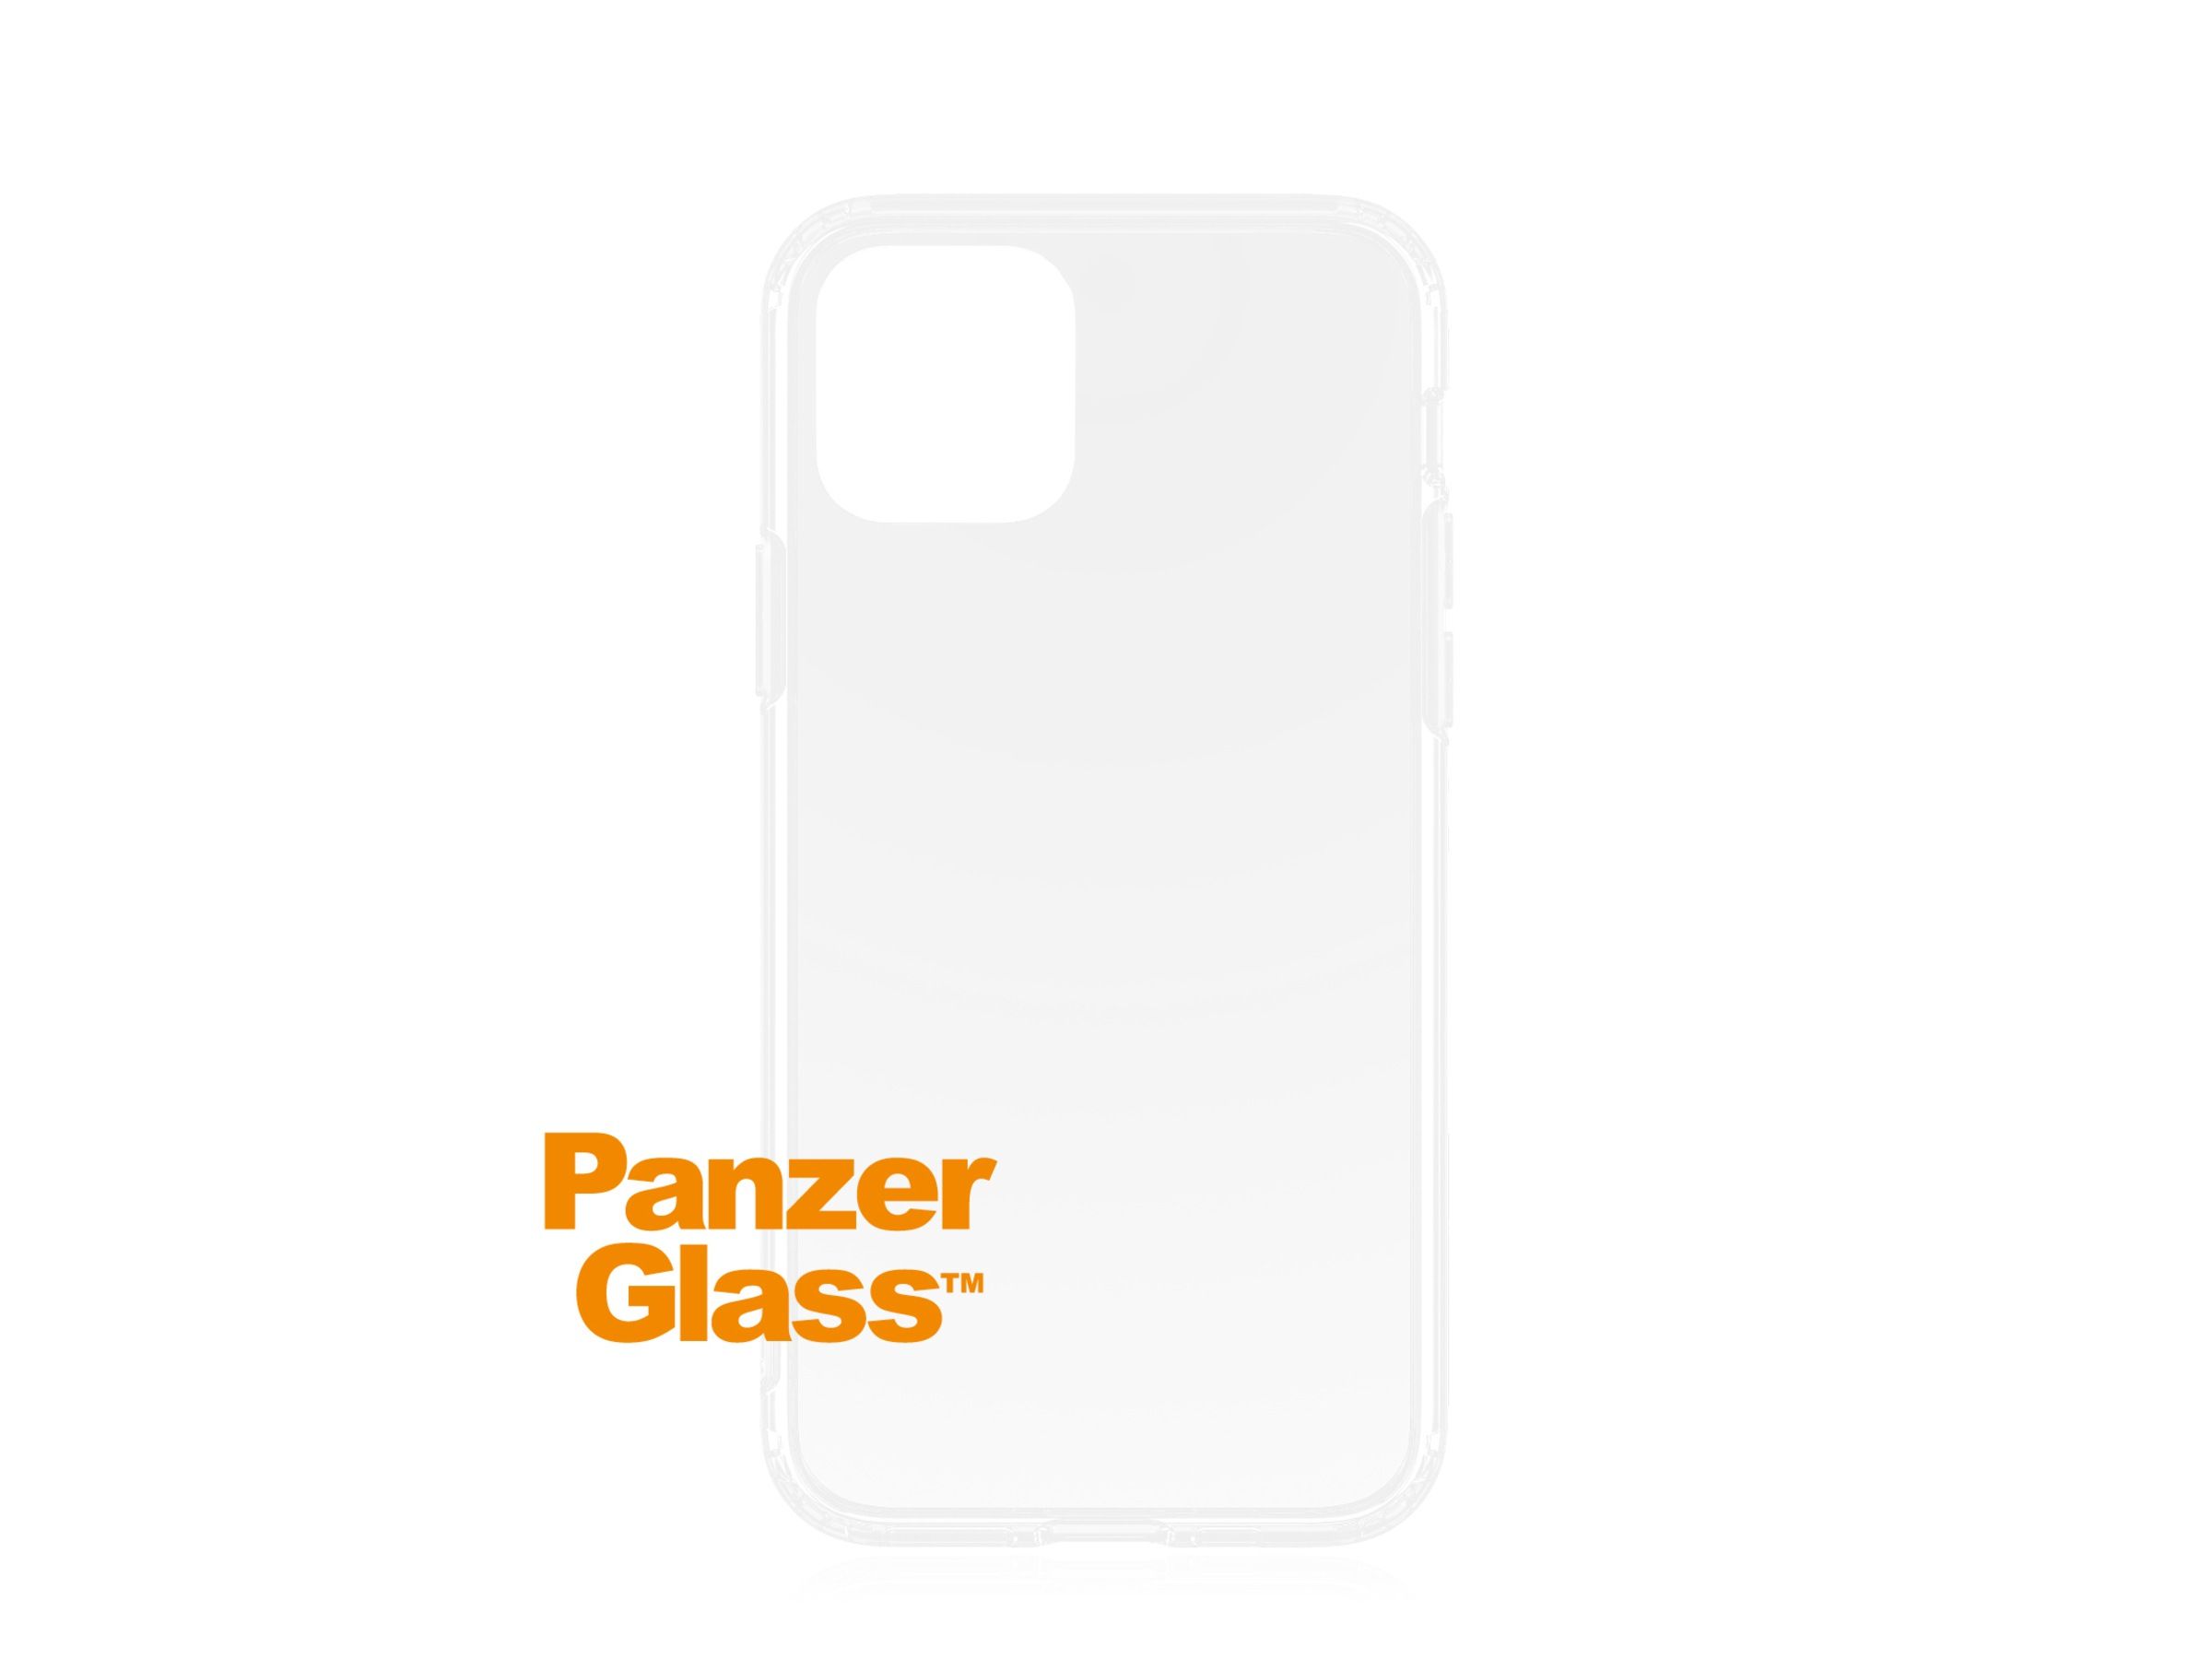 PanzerGlass ClearCase